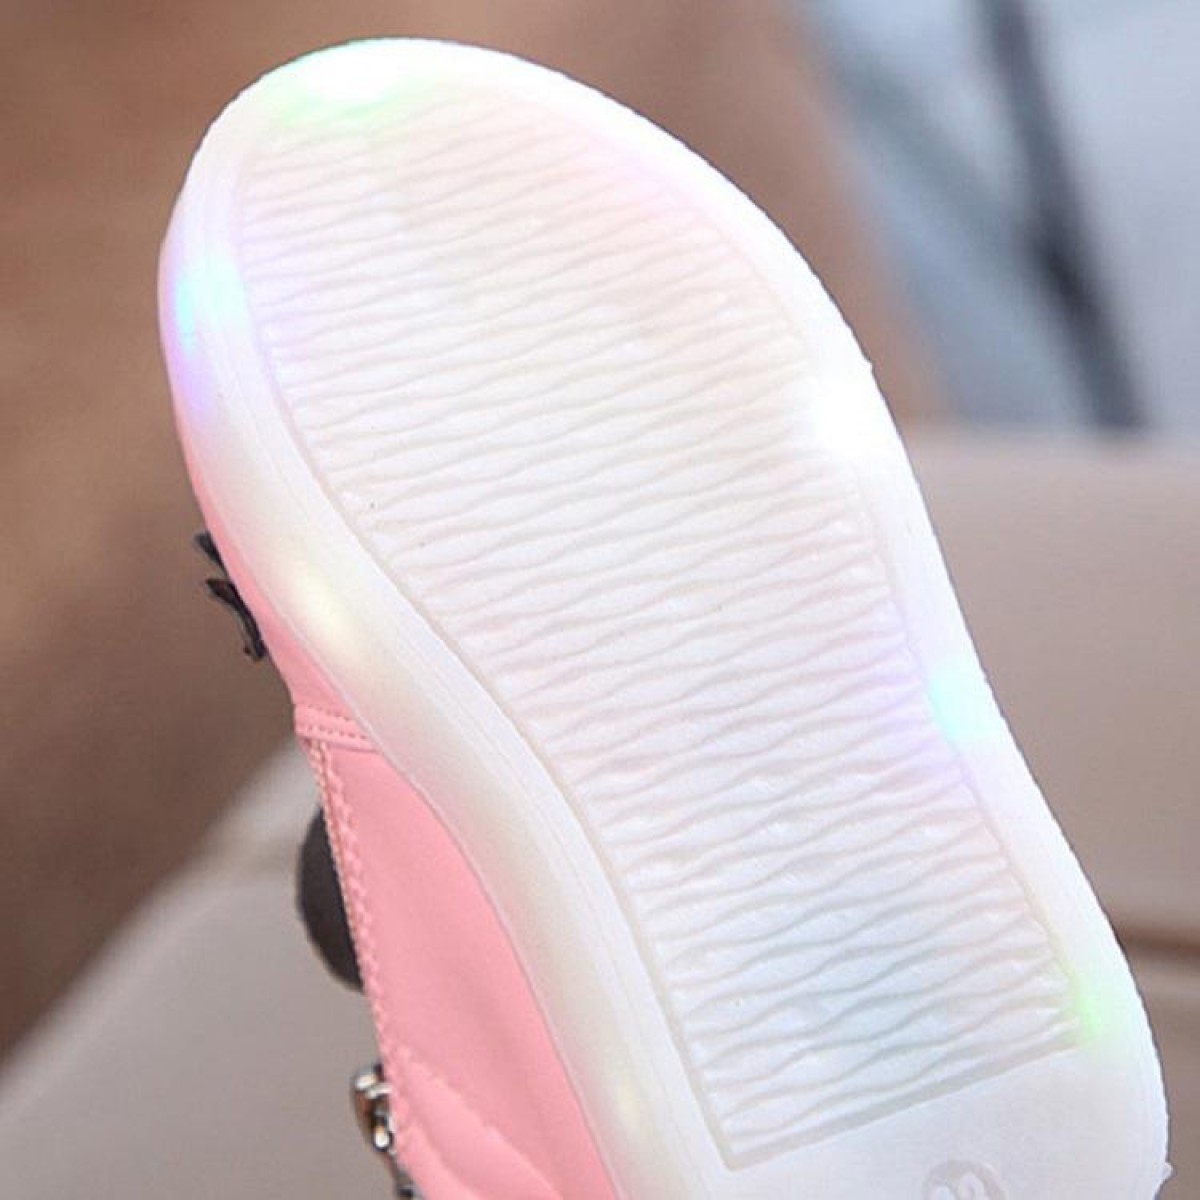 Kids Shoes Baby Infant Girls Eyelash Crystal Bowknot LED Luminous Boots Shoes Sneakers, Size:23(Black)